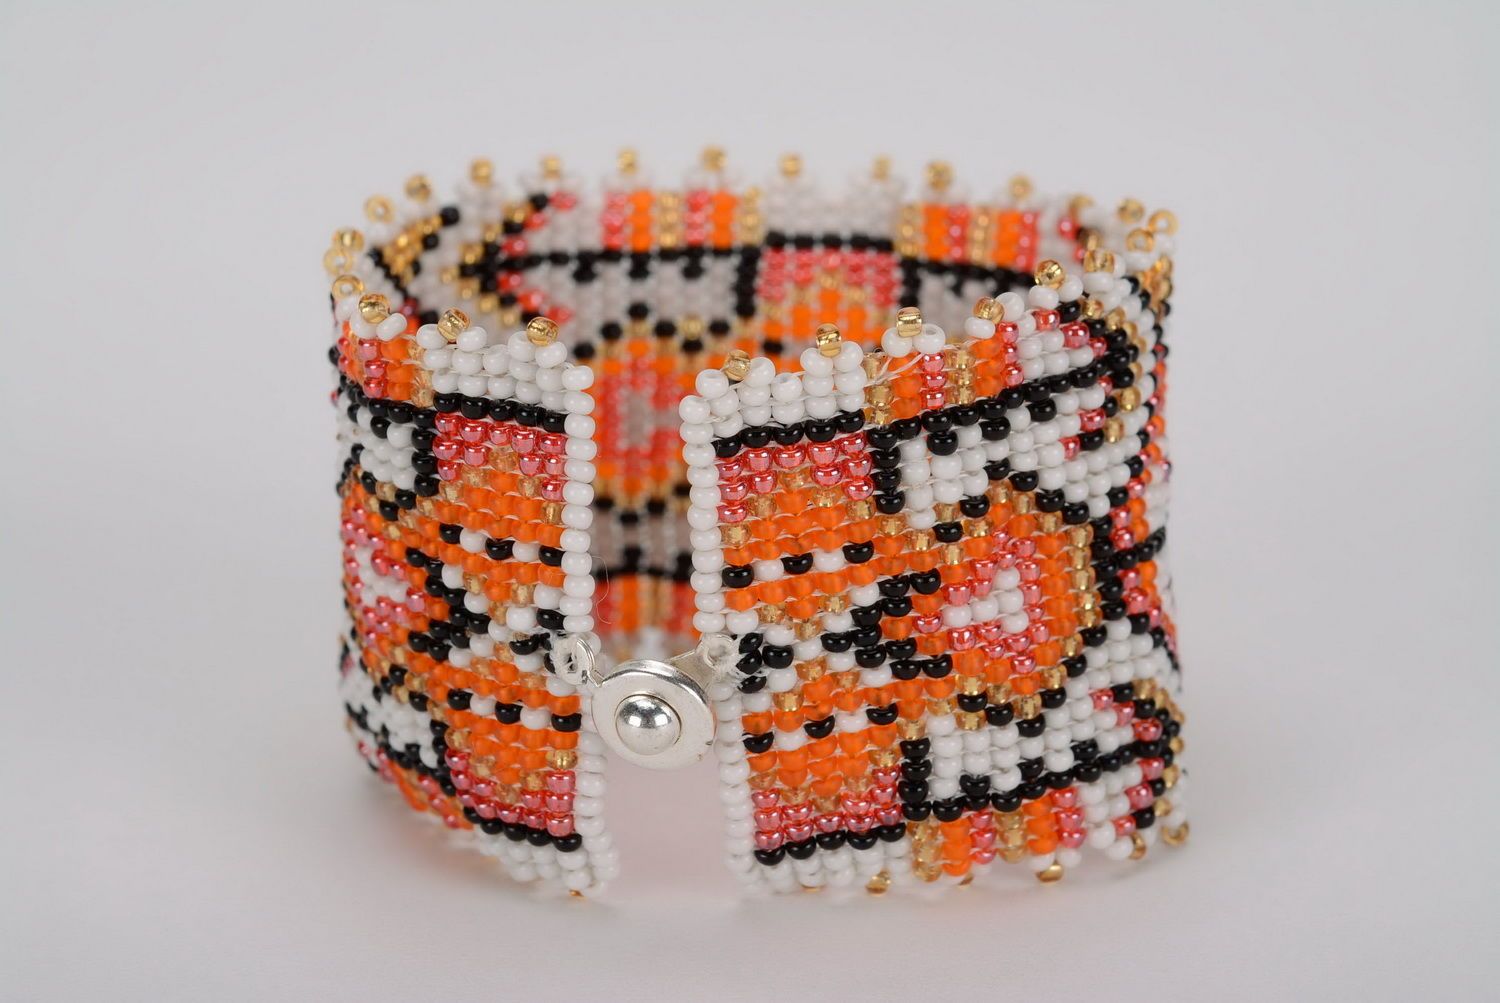 Bracelet with Czech beads photo 1